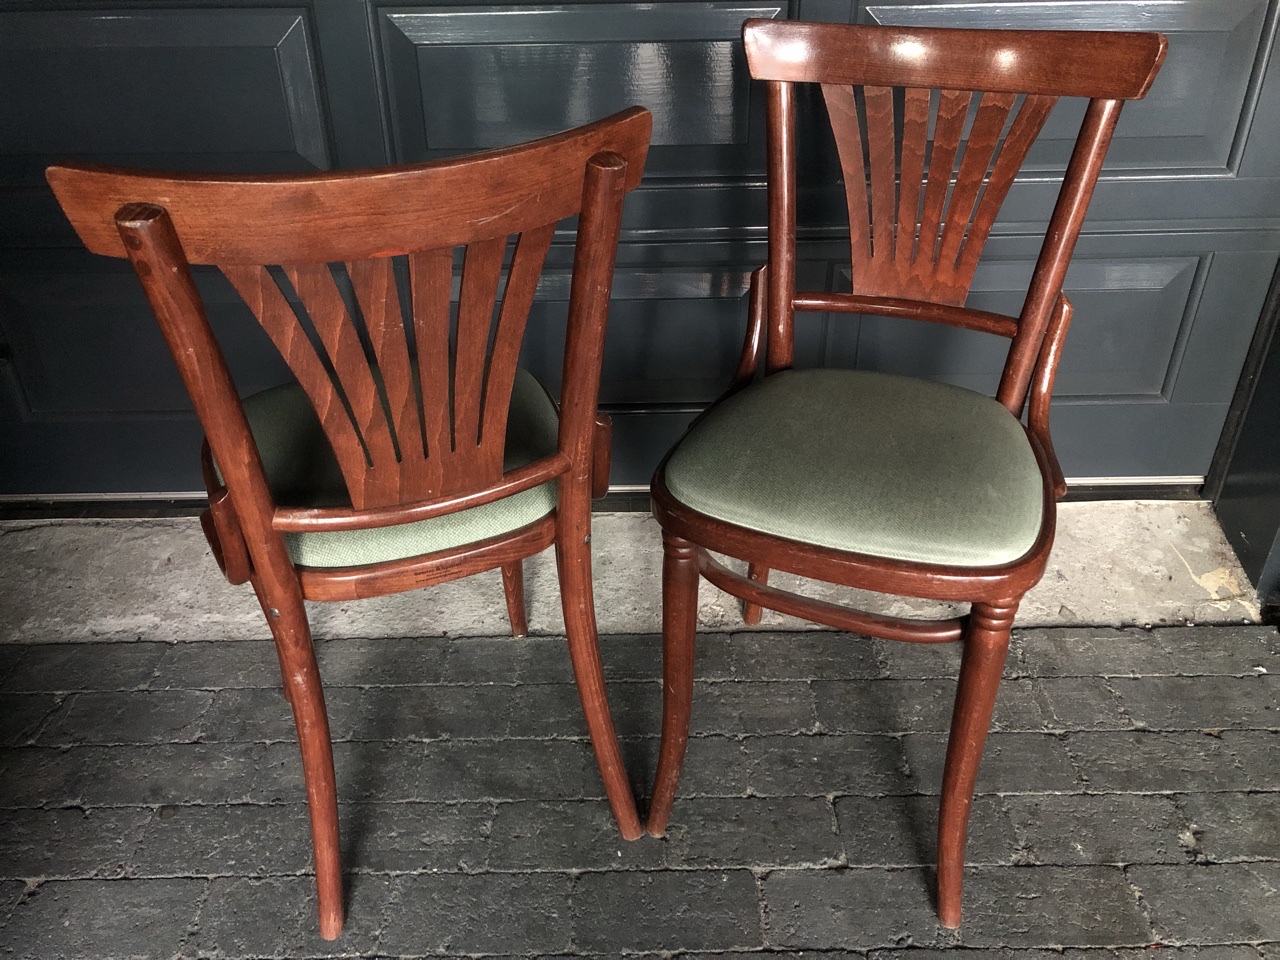 Breda cafe stoelen kantine meubilair bedrijf particulier chairs stolar chaises 